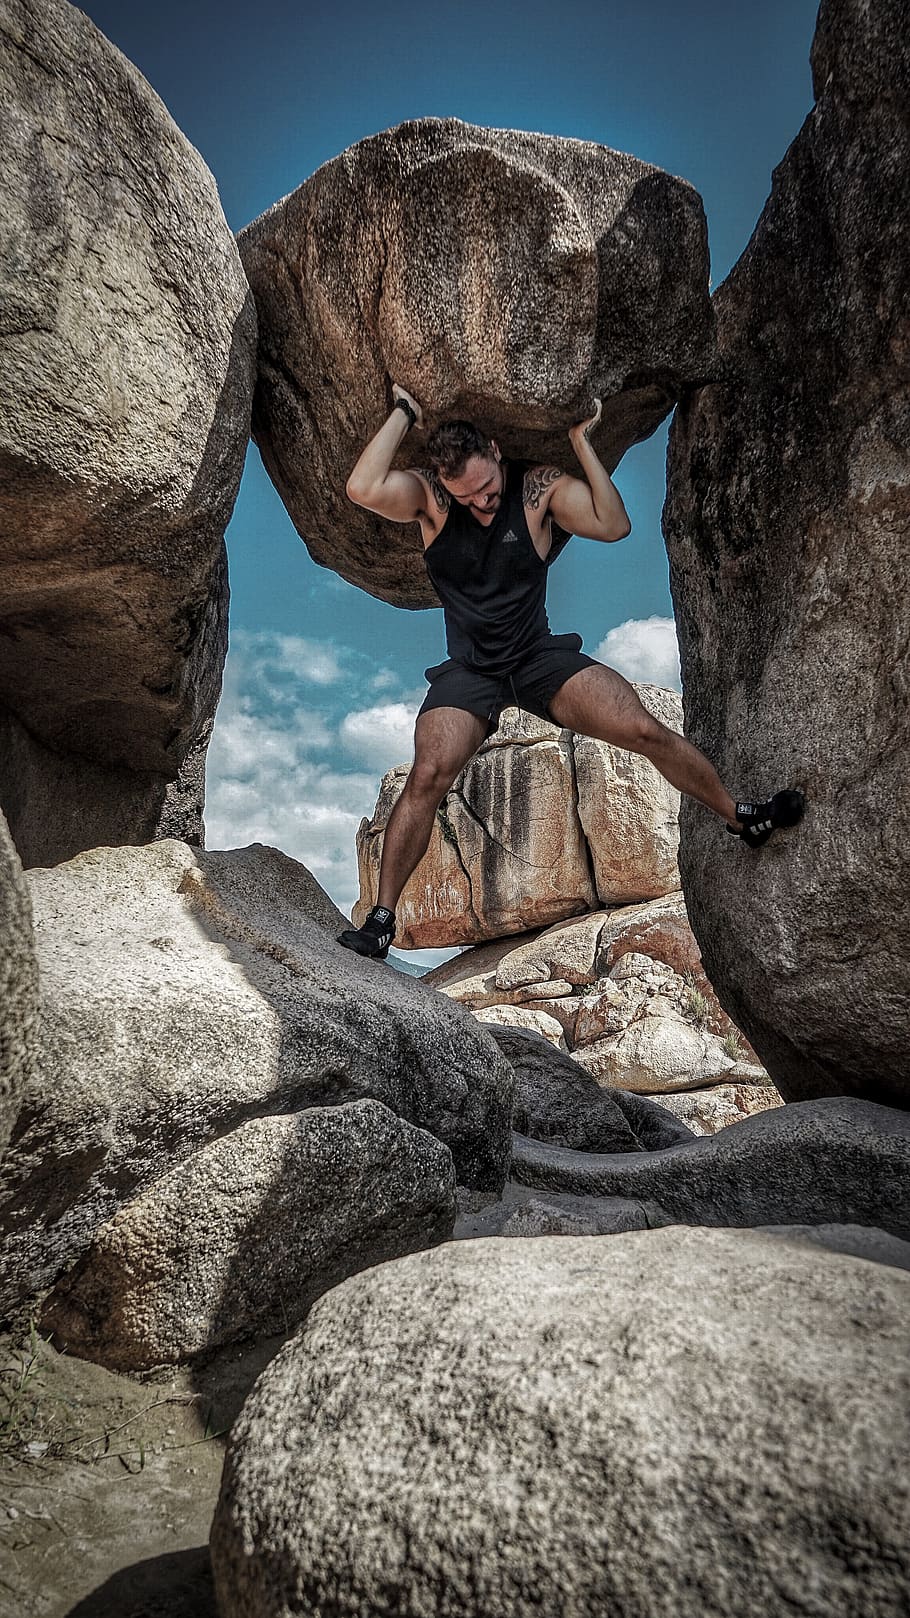 man carrying rock, outdoors, adventure, leisure activities, human